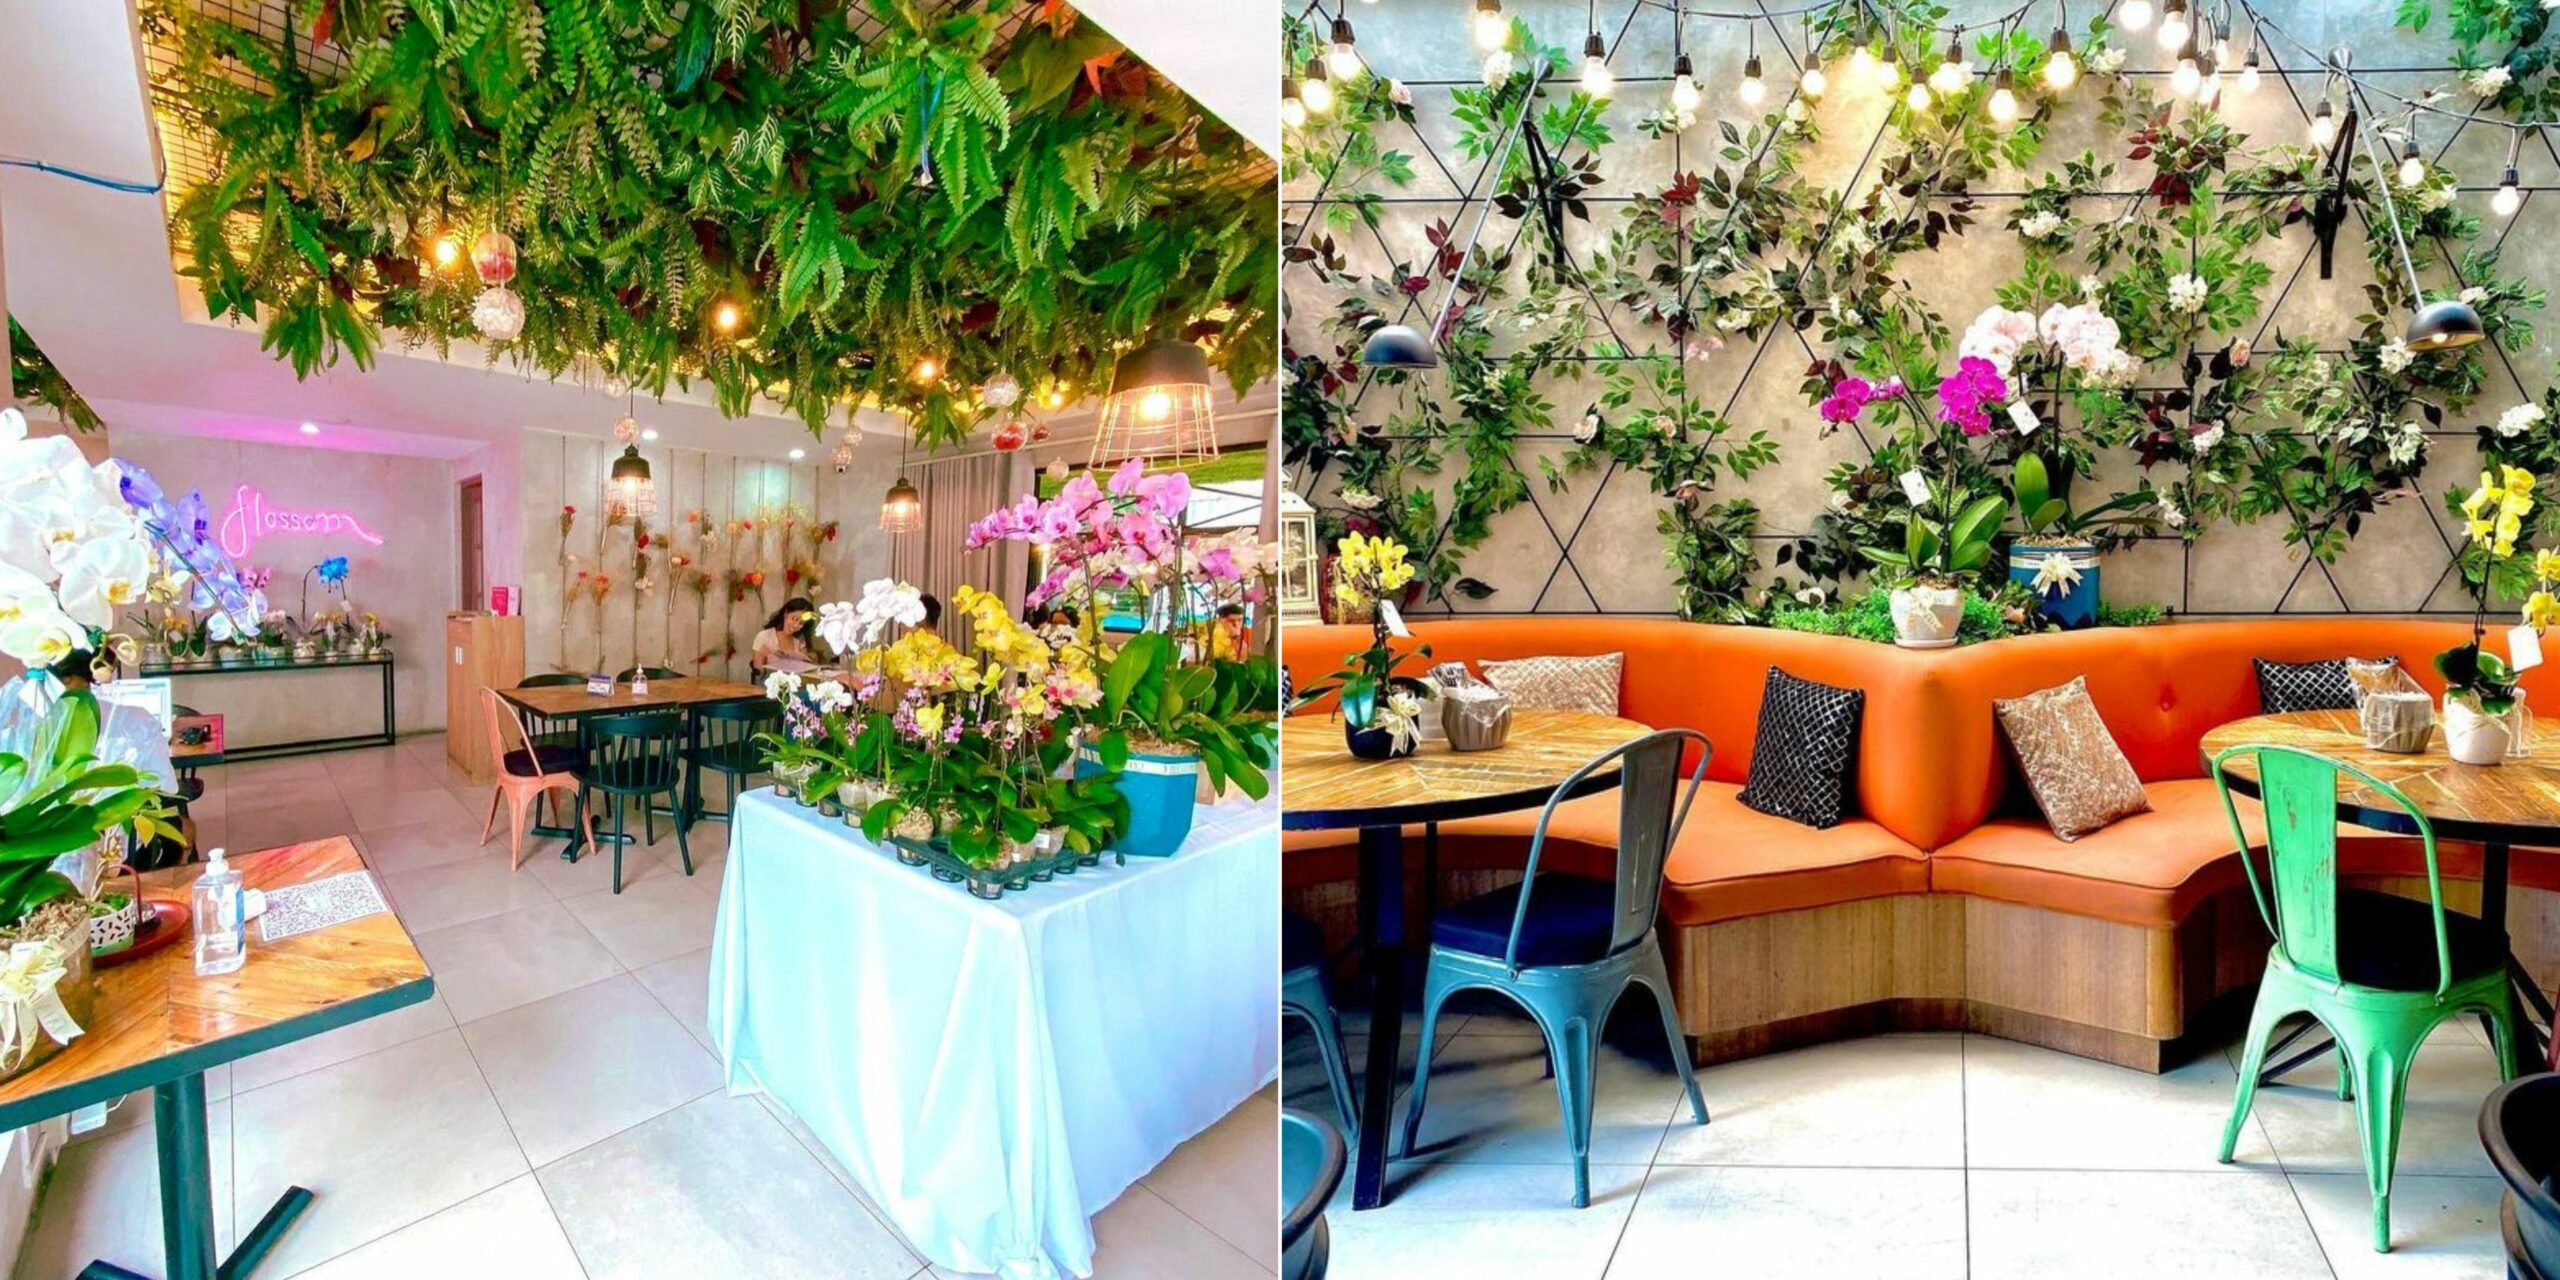 Flower-themed cafes - Flossom Kitchen + Bar